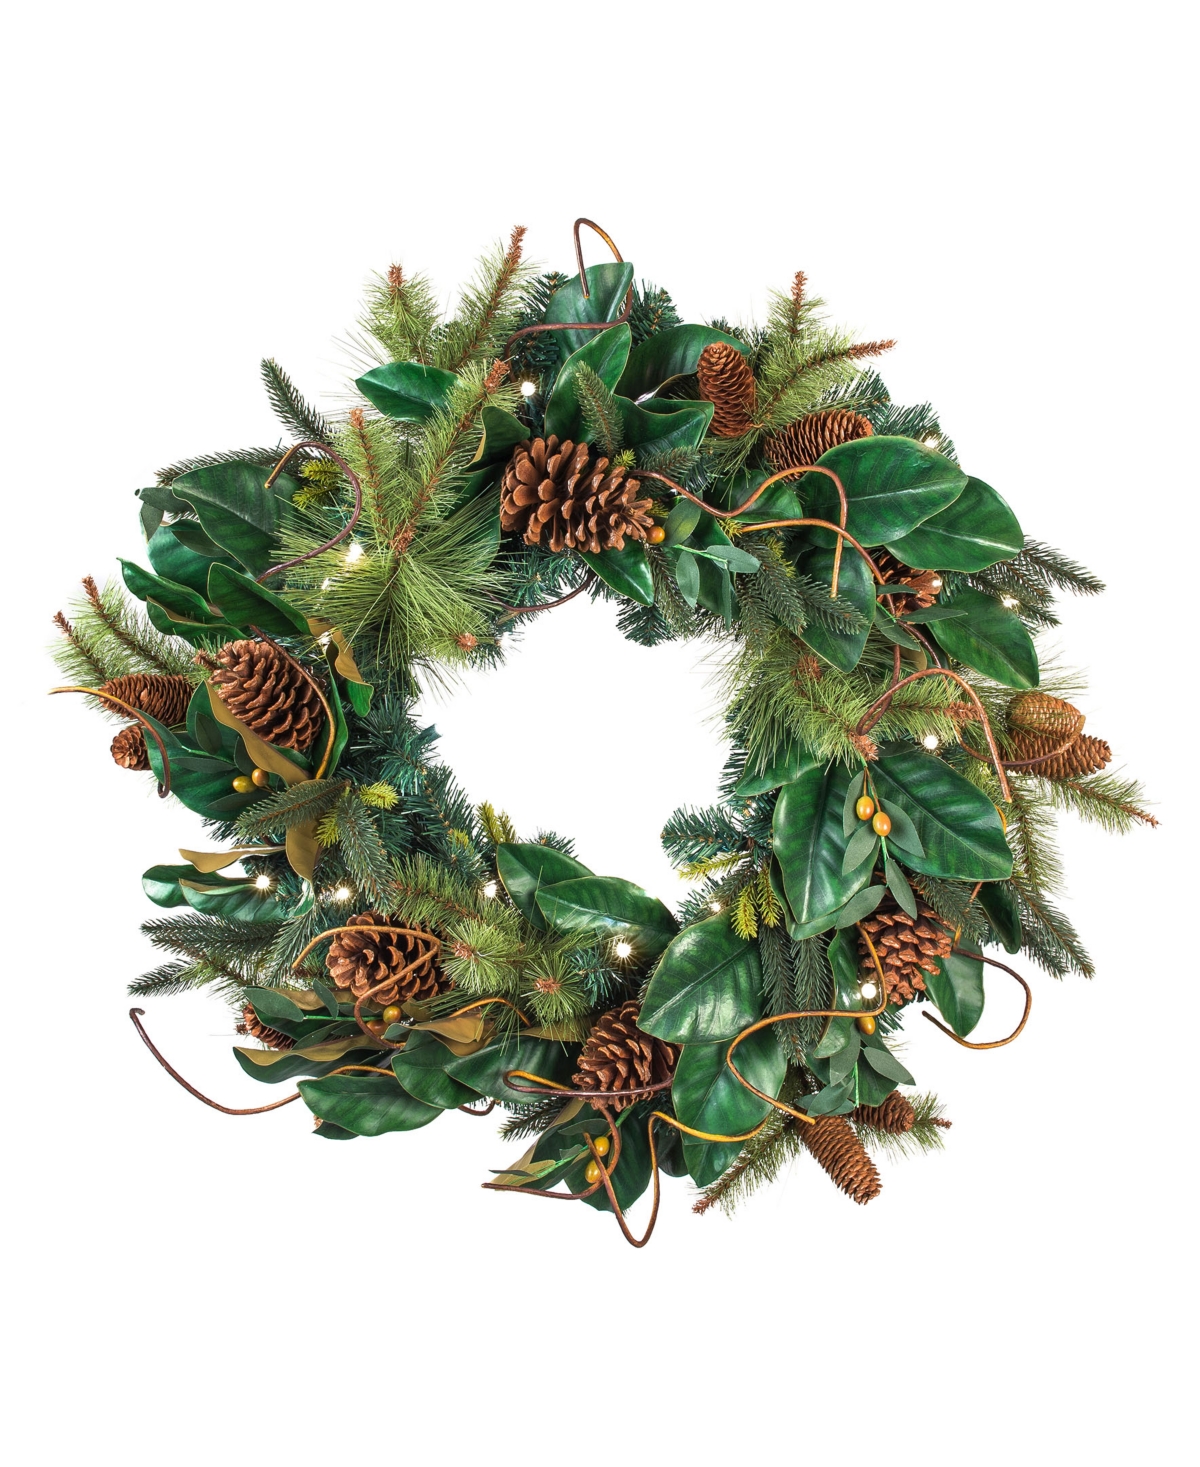 30" Holiday Wreath with Lights, Magnolia Leaf - Multi